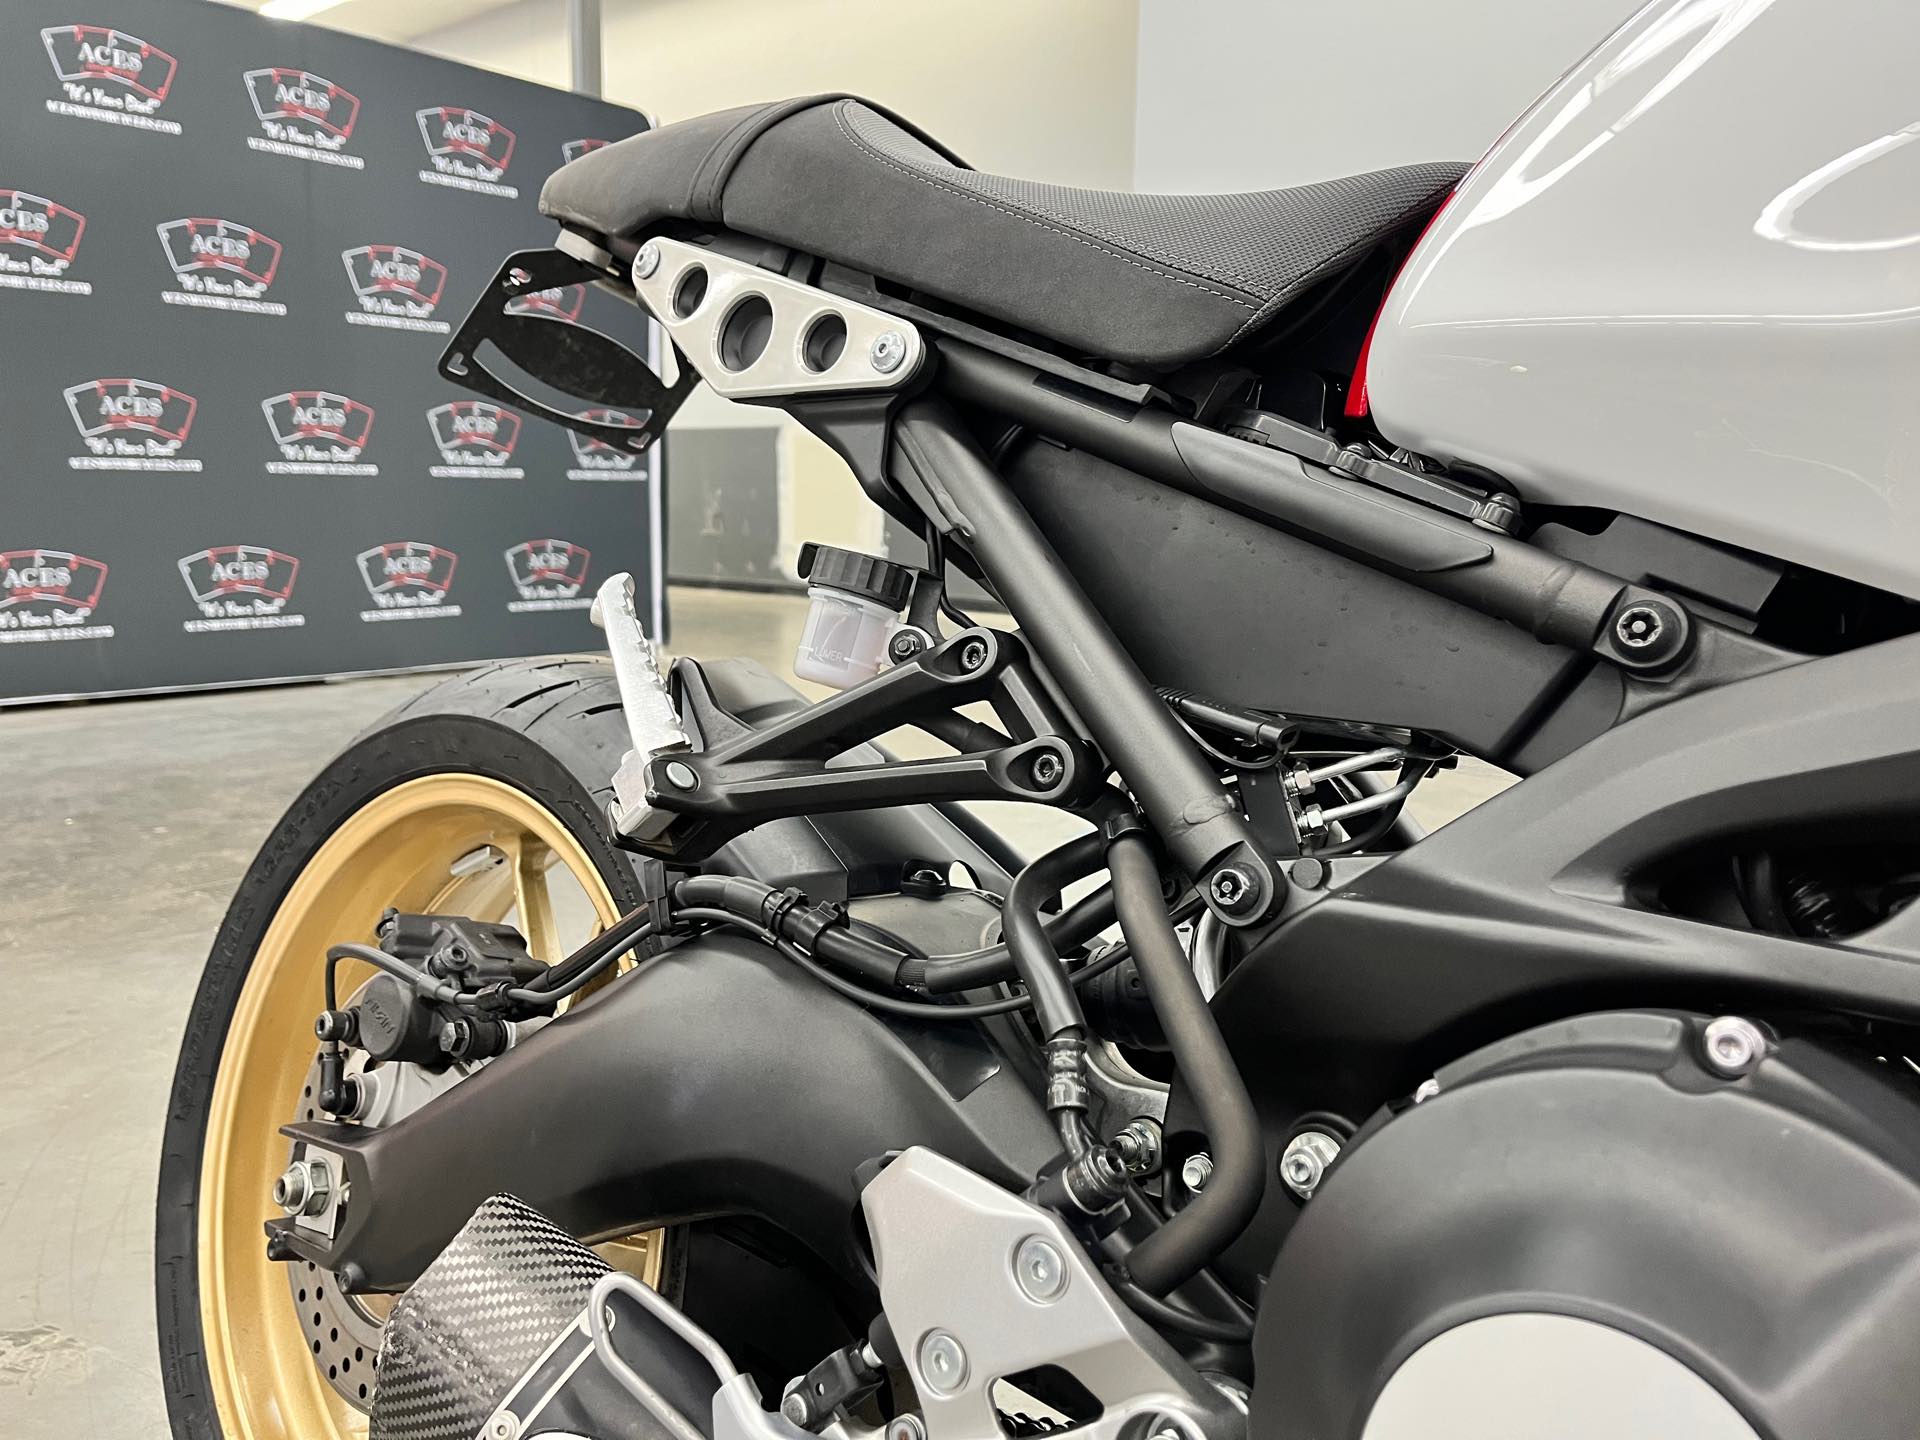 2020 Yamaha XSR 900 at Aces Motorcycles - Denver